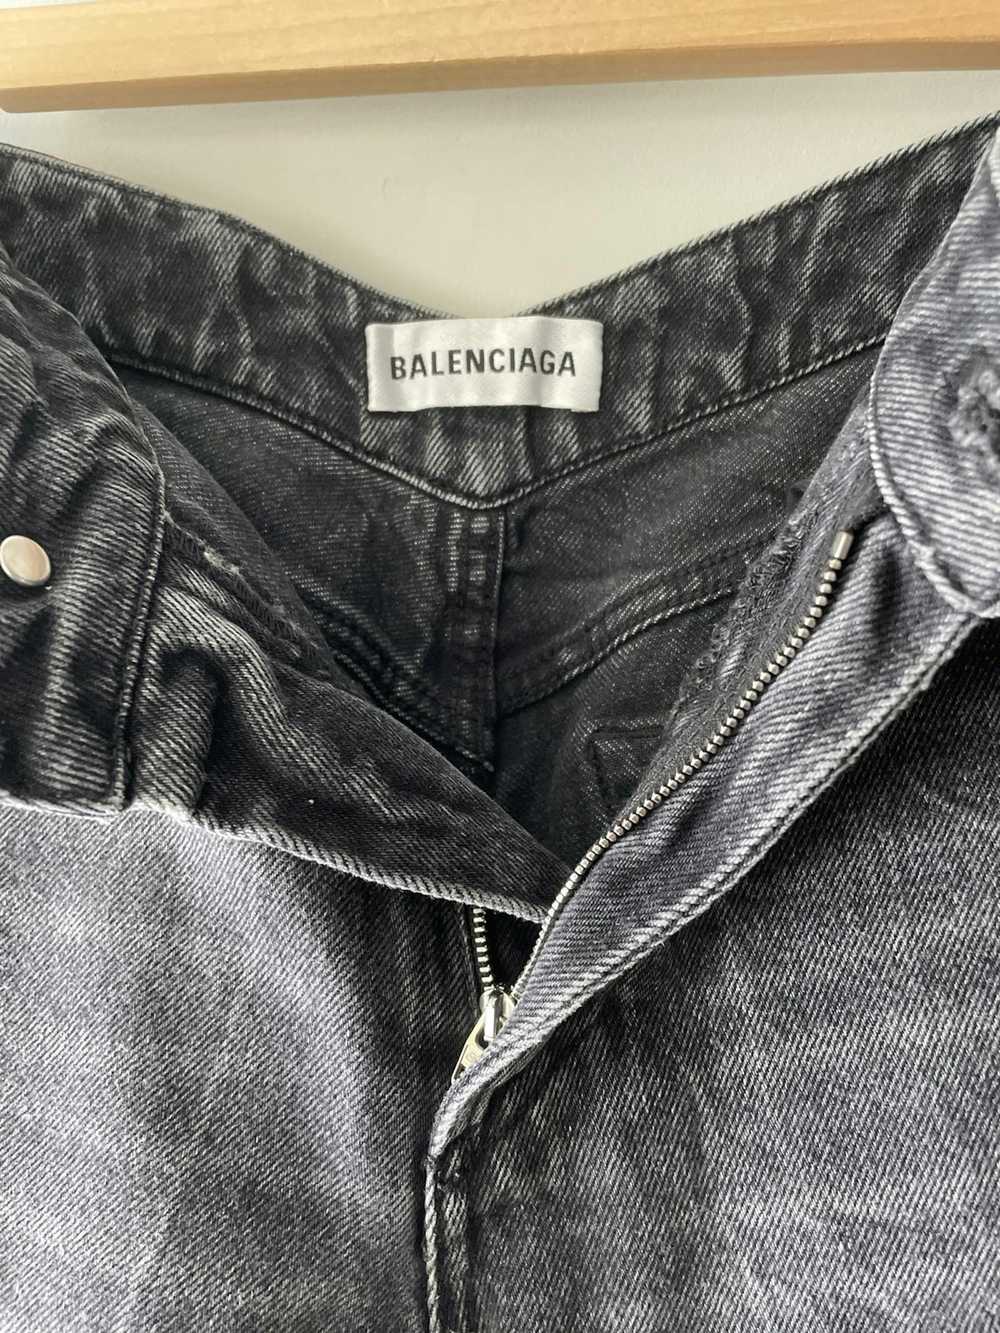 Balenciaga Black Balenciaga washed Jeans - image 5